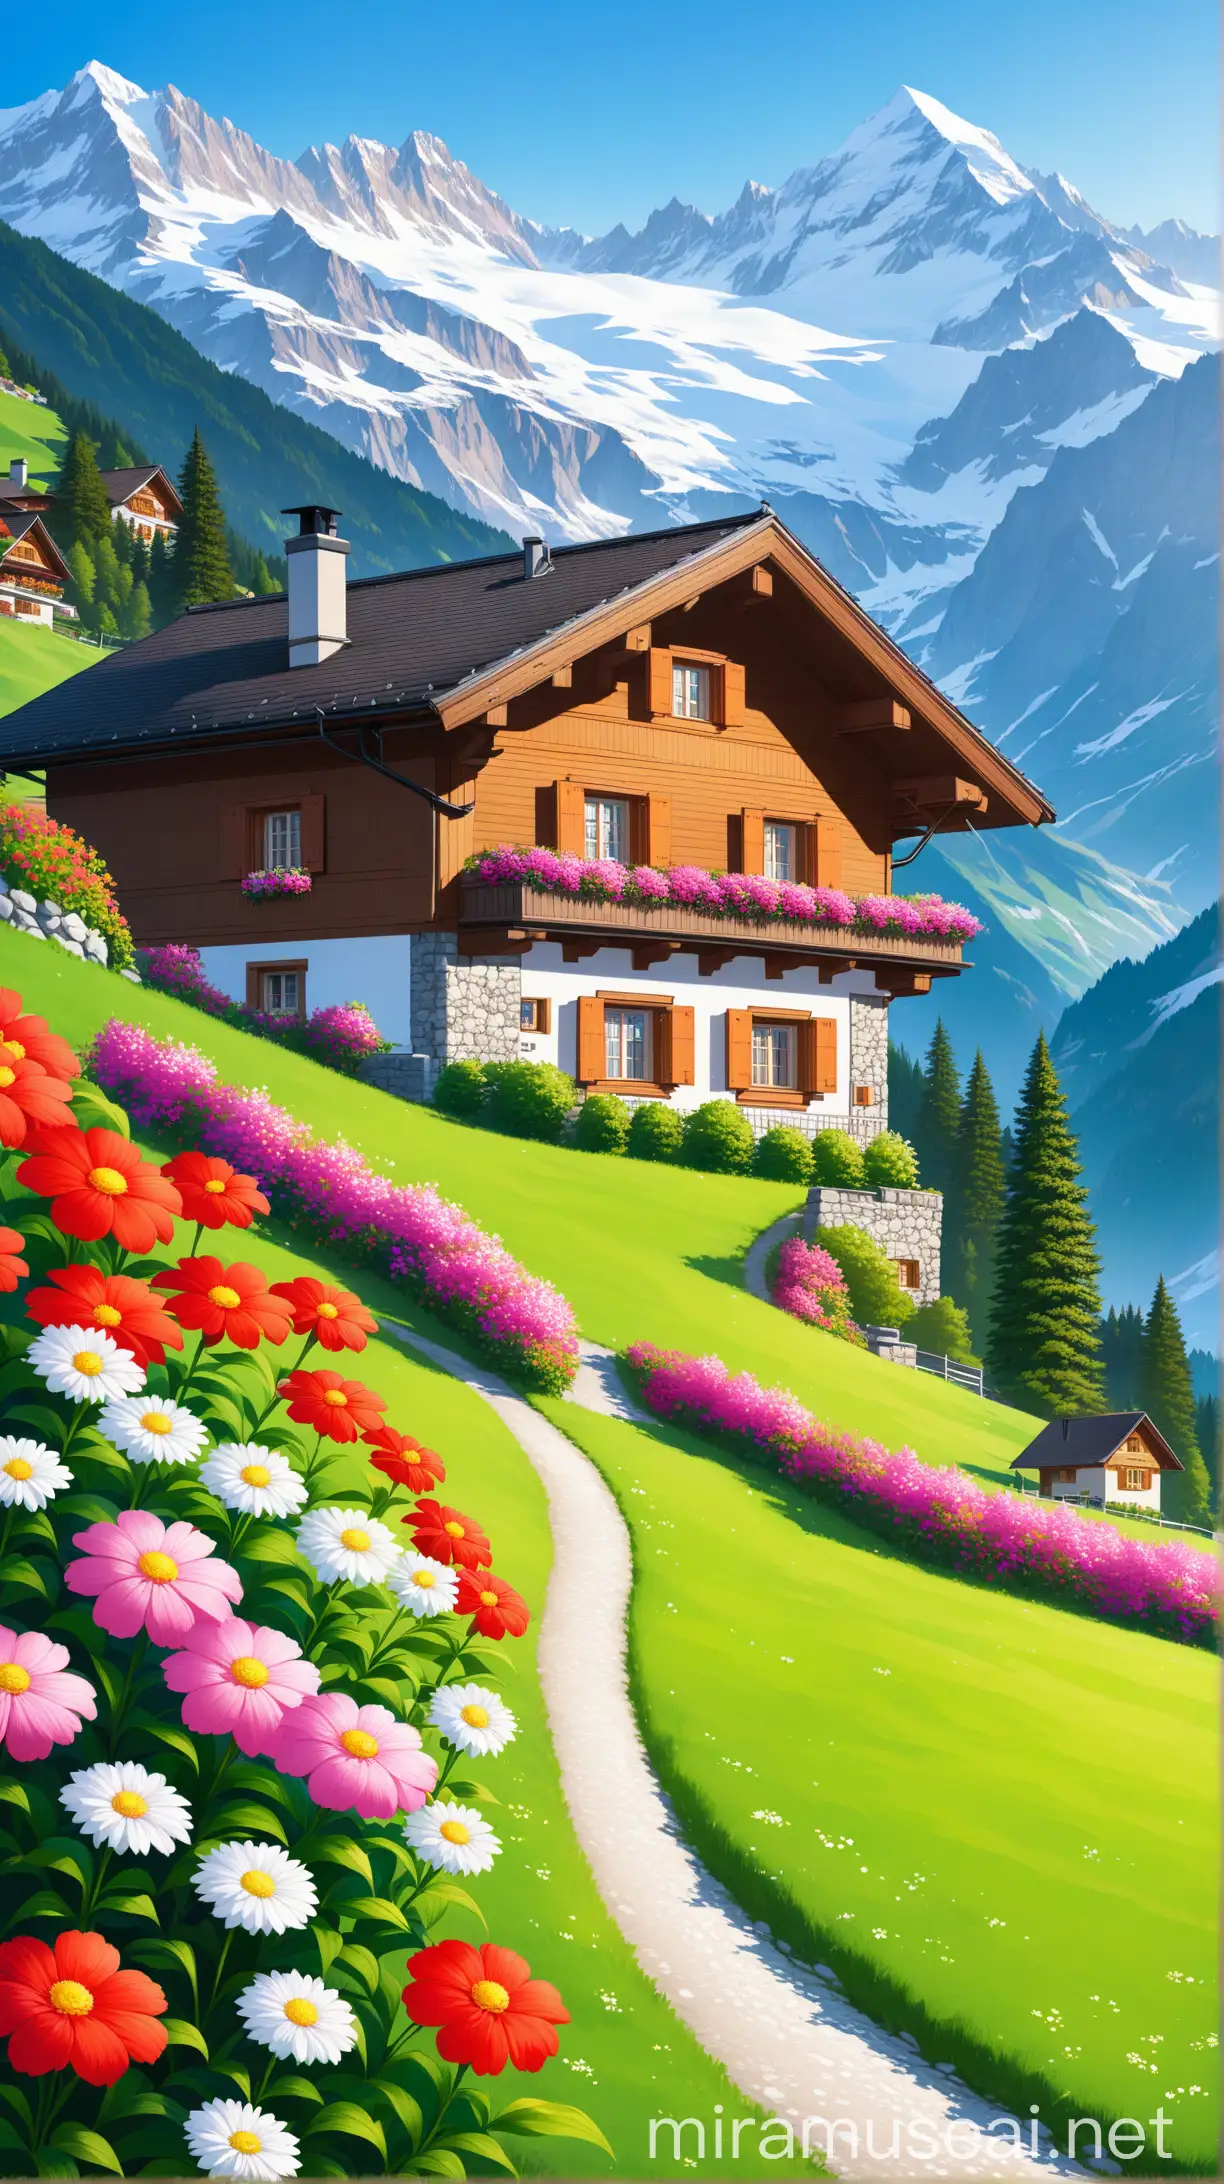 Scenic Switzerland Cottage Snowy Mountain Retreat with Lush Garden